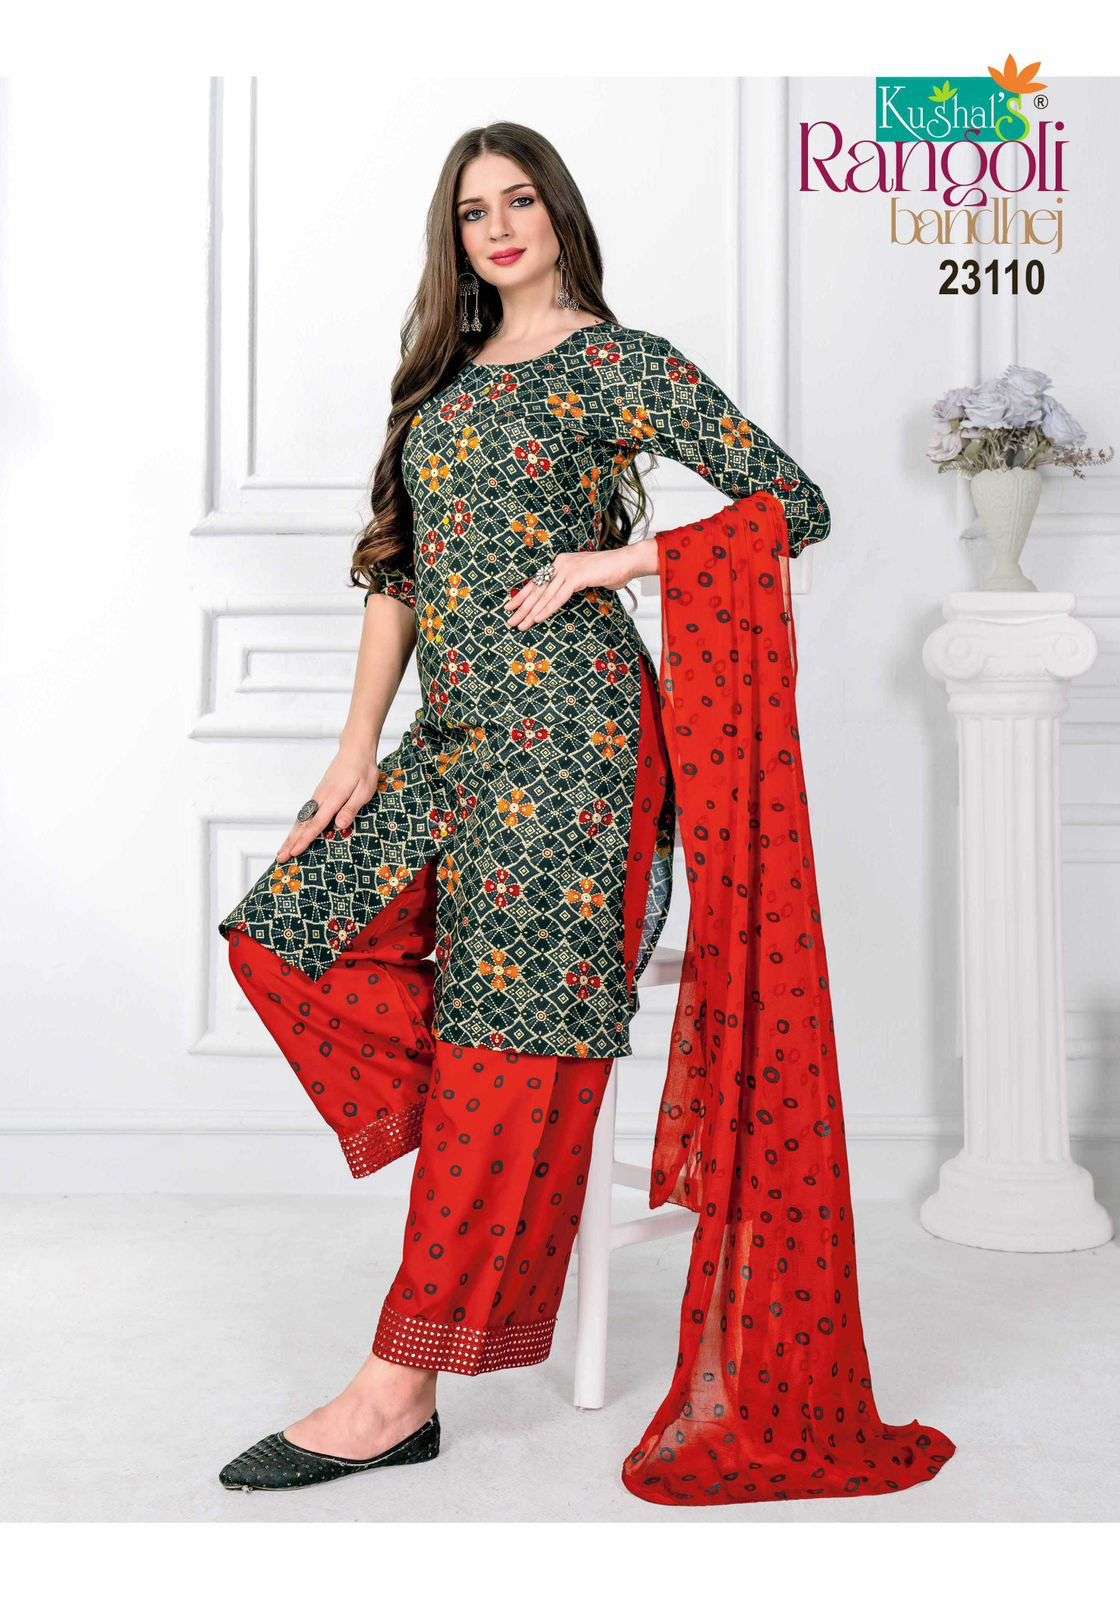 kushals rangoli 23001-23010 series rayon designer kurtis catalogue wholesale price surat